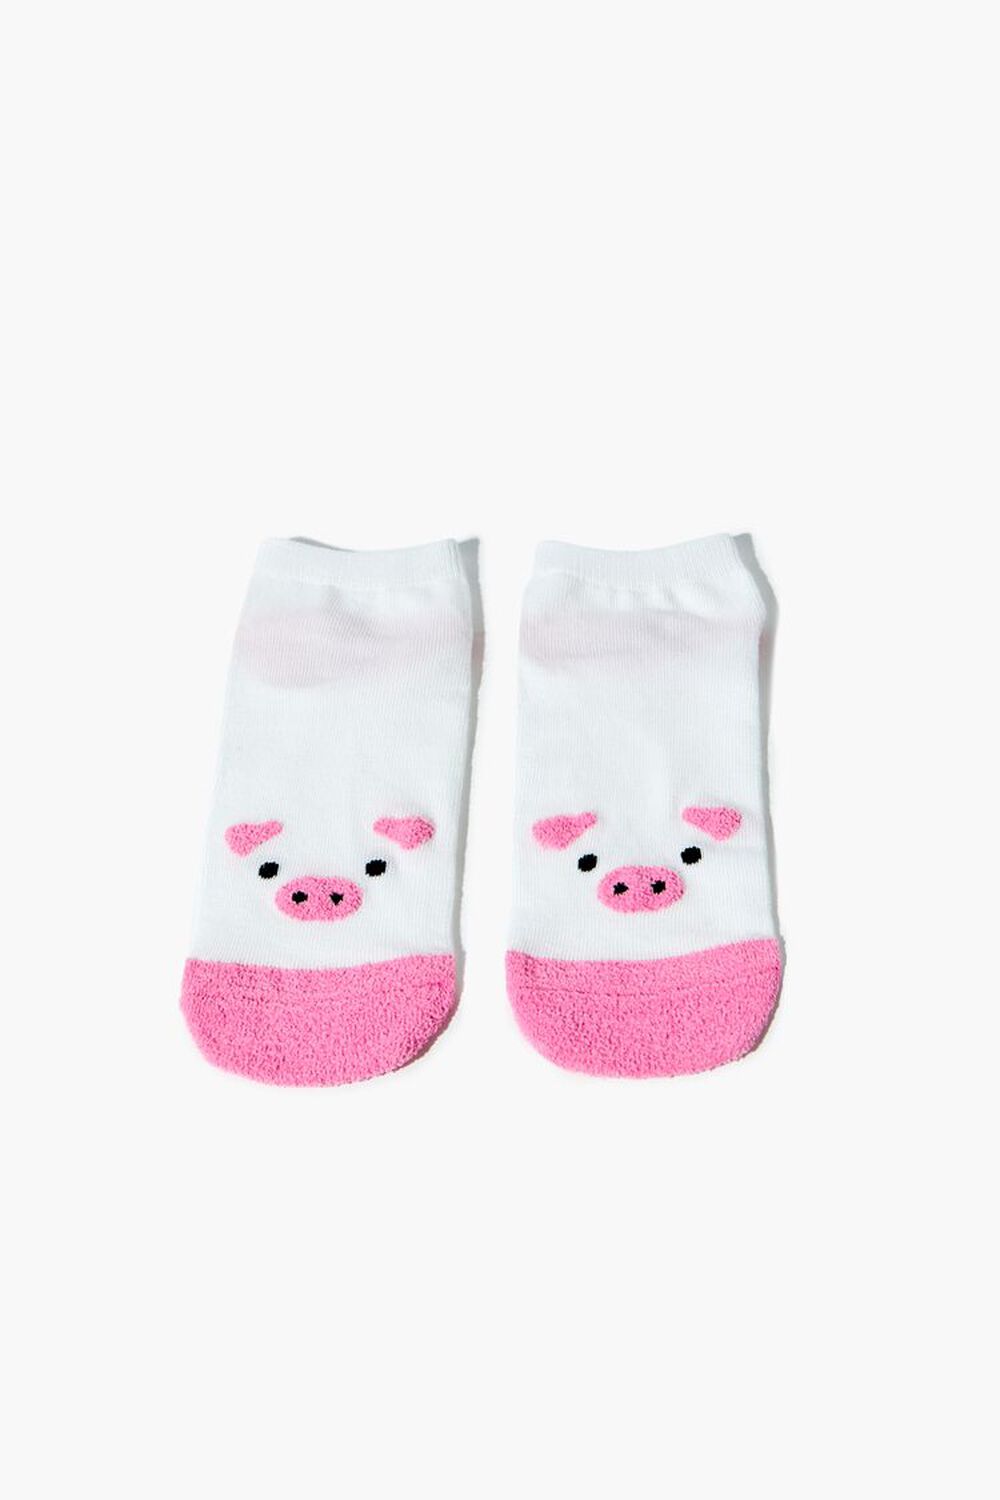 Textured Pig Ankle Socks, image 2